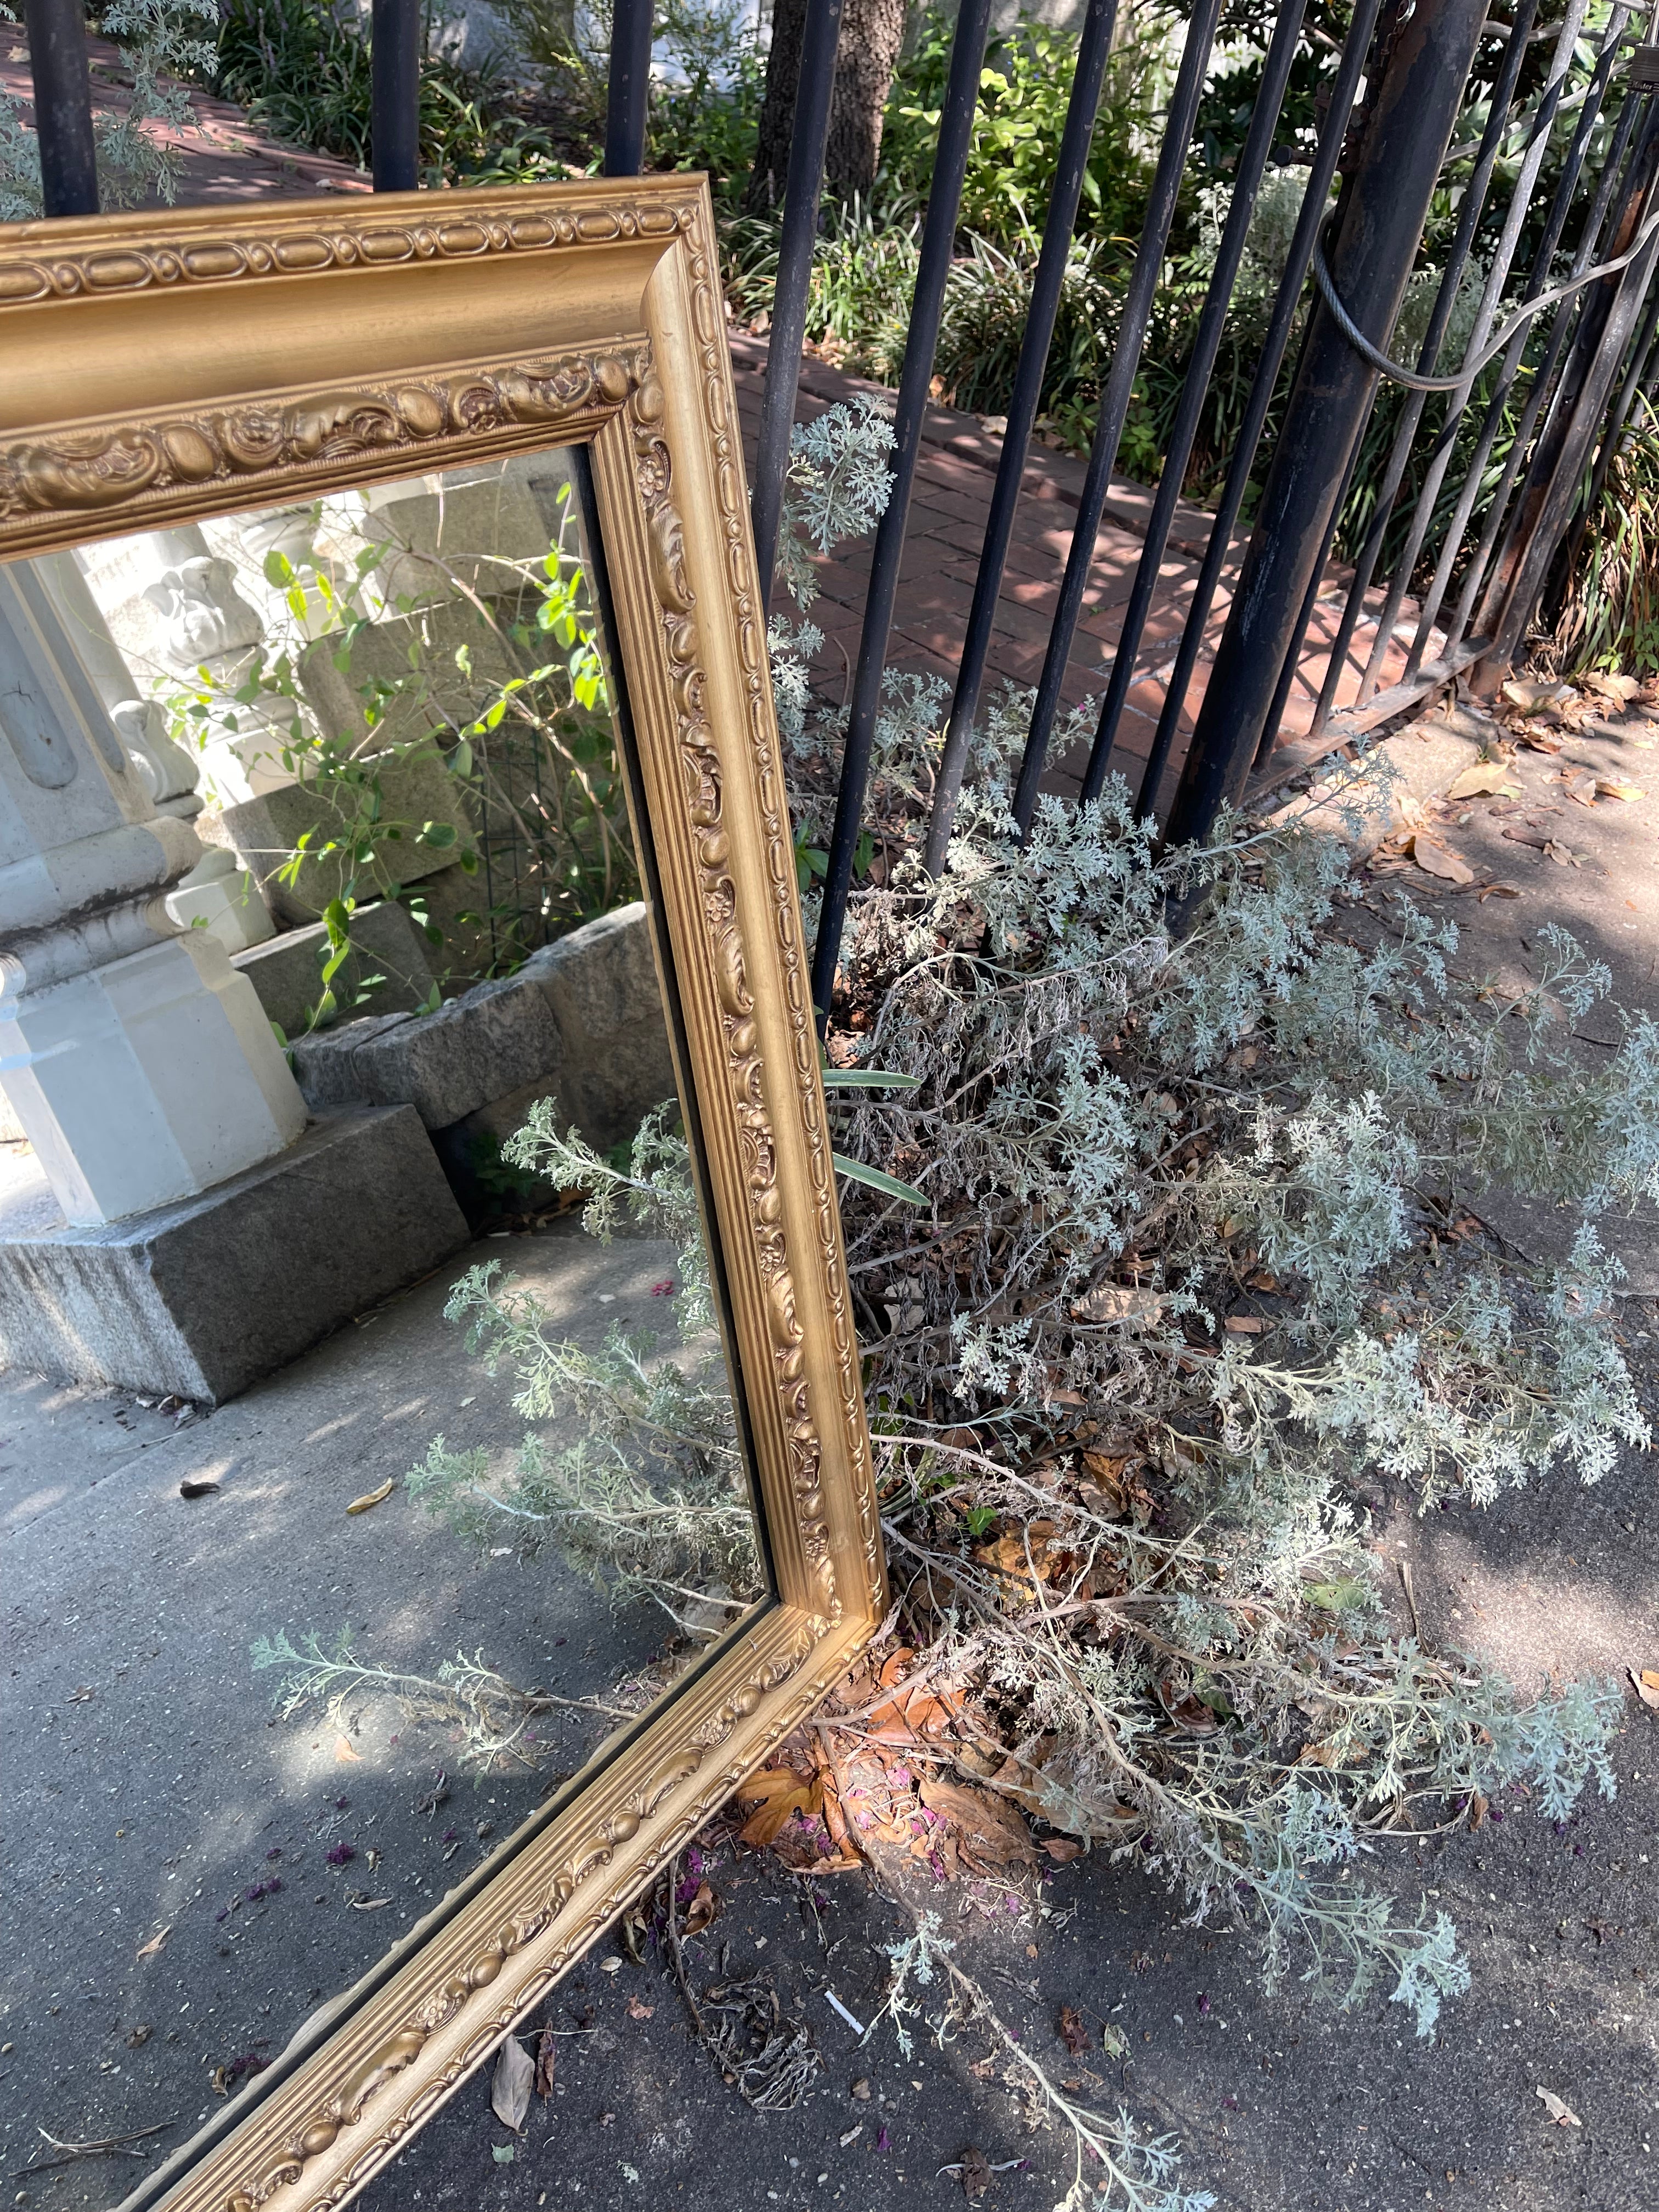 Gold Rectangular Mirror